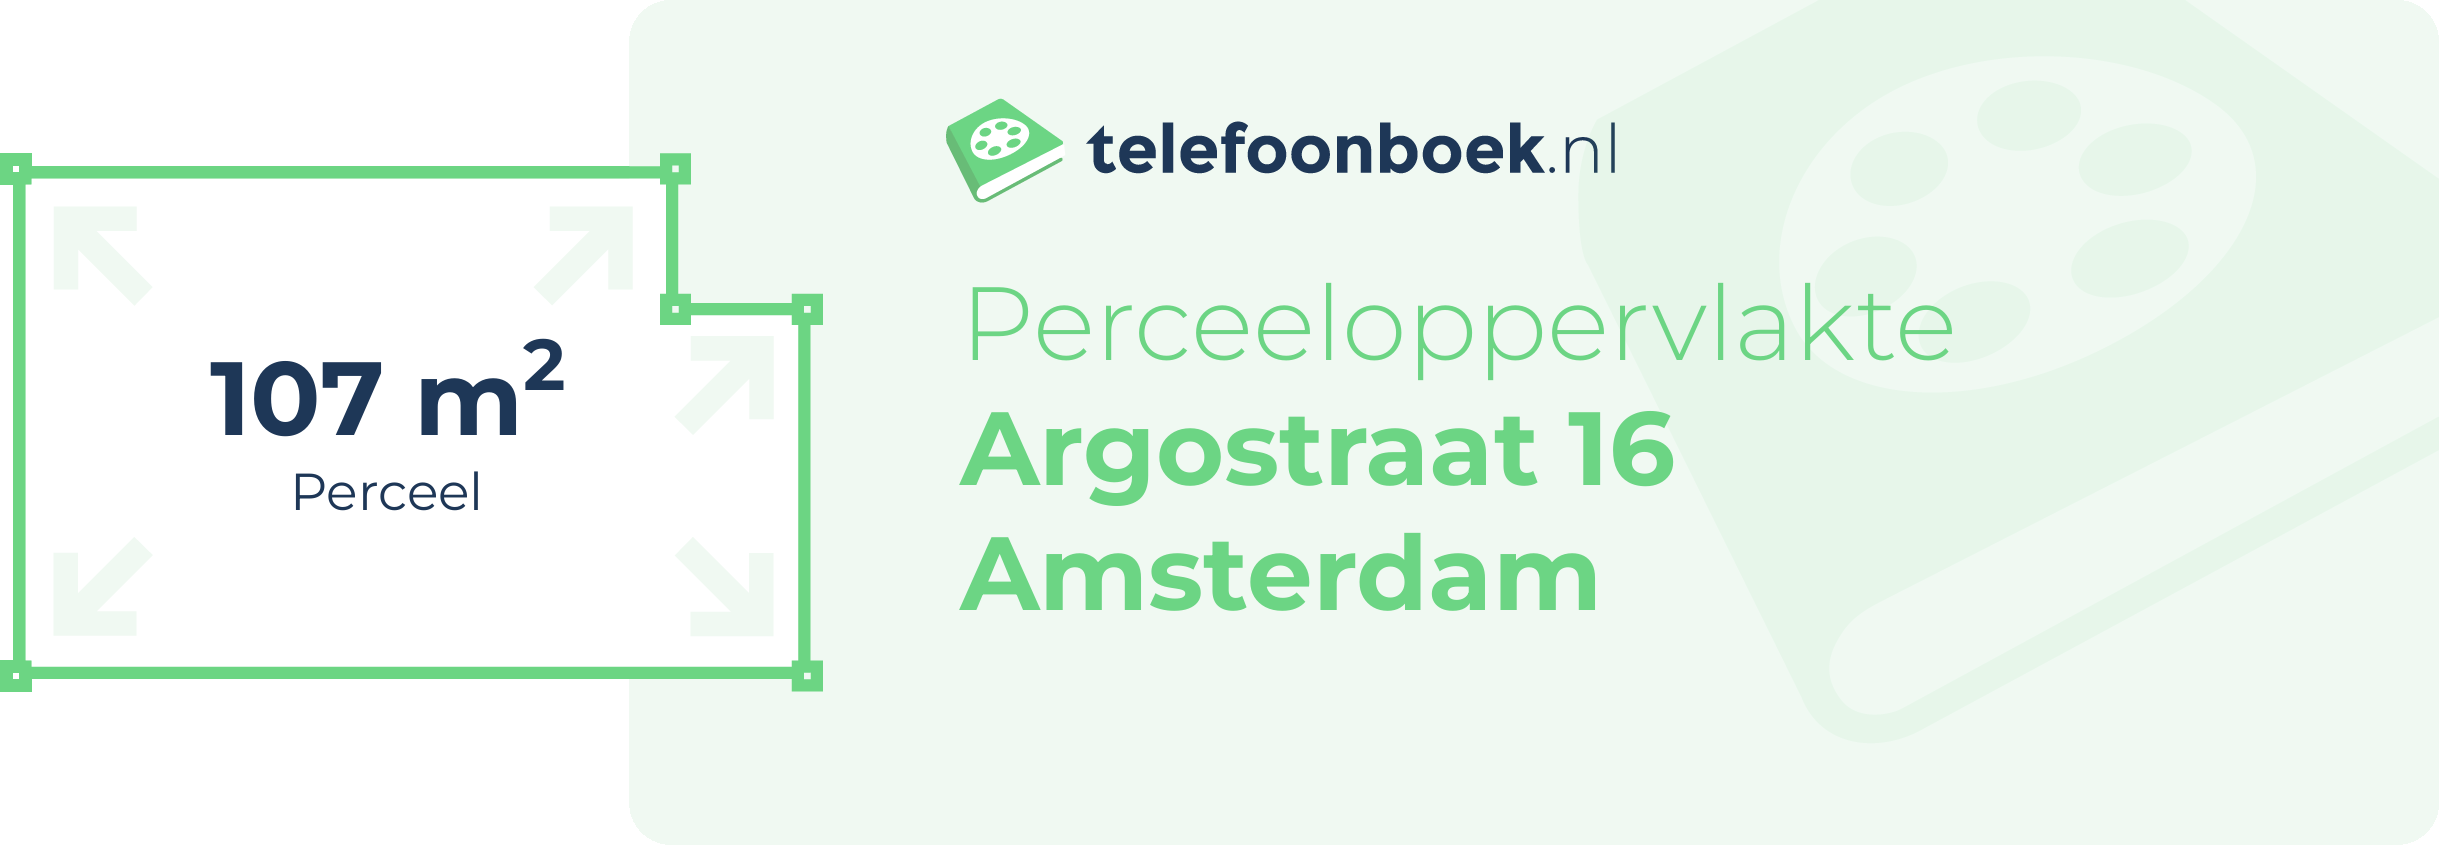 Perceeloppervlakte Argostraat 16 Amsterdam